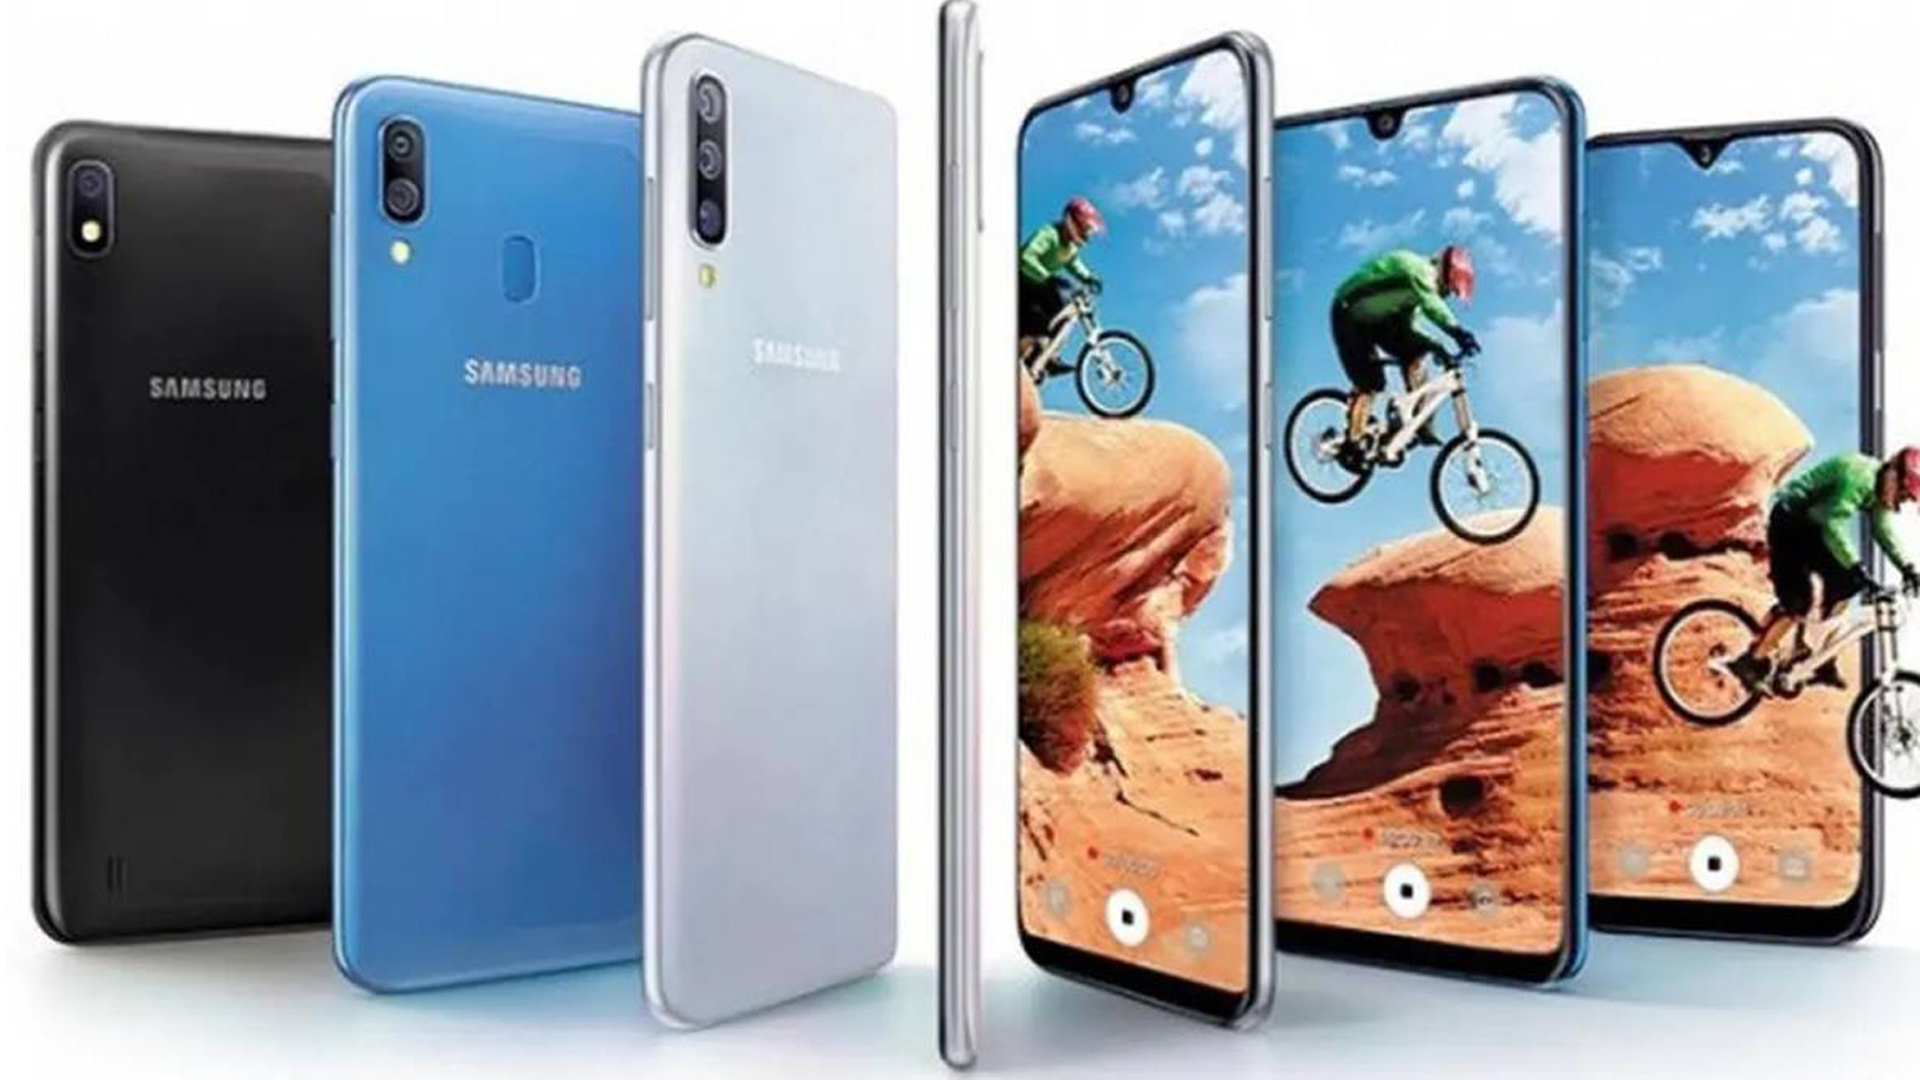 Samsung ofrecerÃ¡ el A50 como un celular de gama media alta similar al